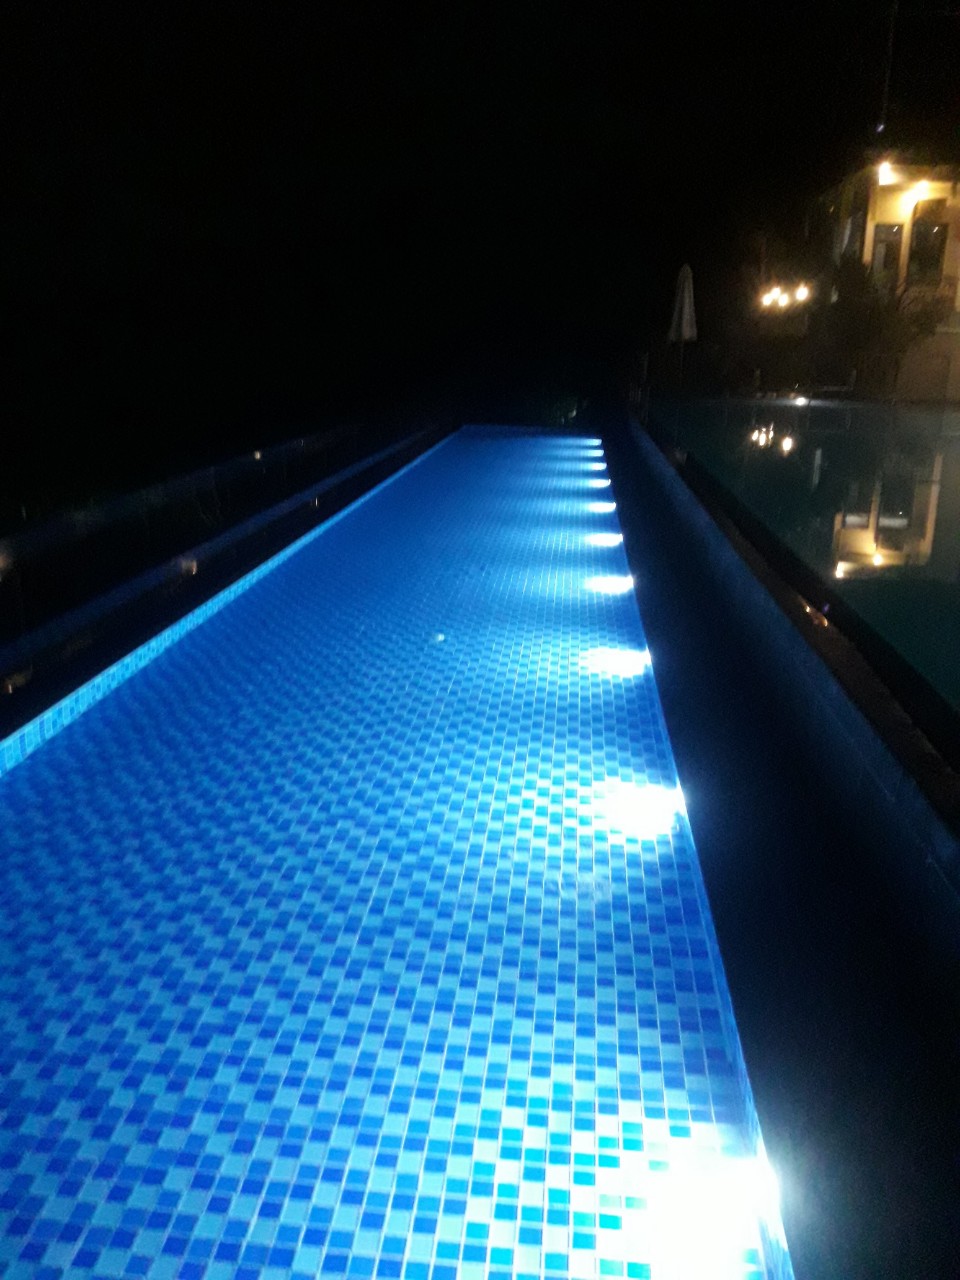 Pool light installation in Malaysia